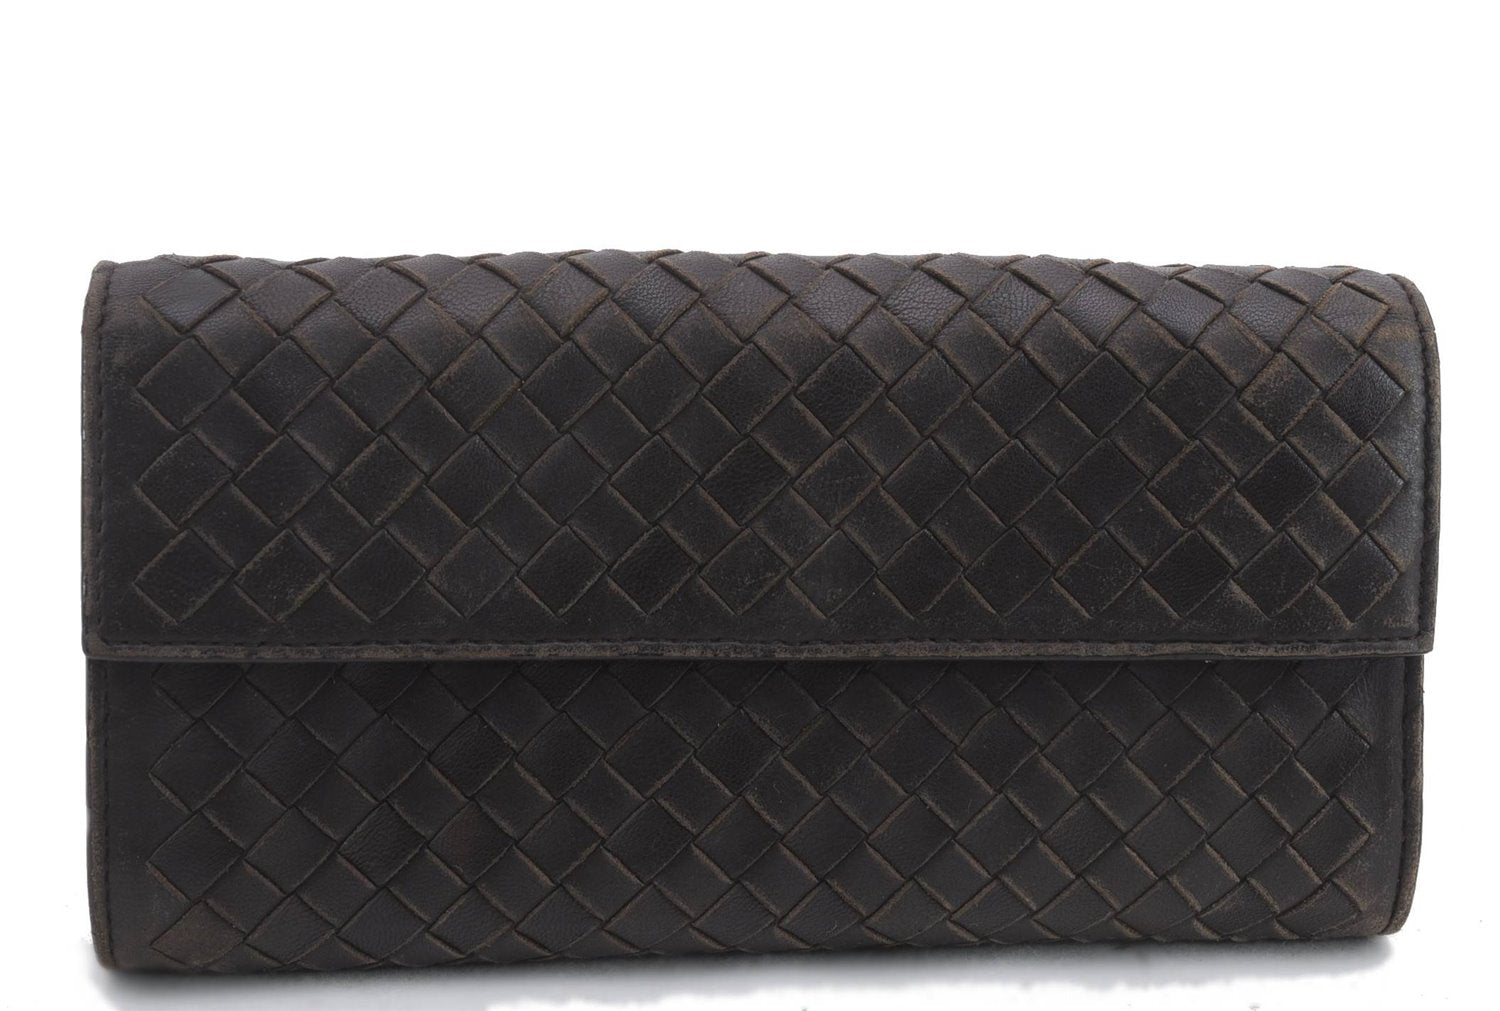 Authentic BOTTEGA VENETA Intrecciato Leather Long Wallet Purse Brown 9482C